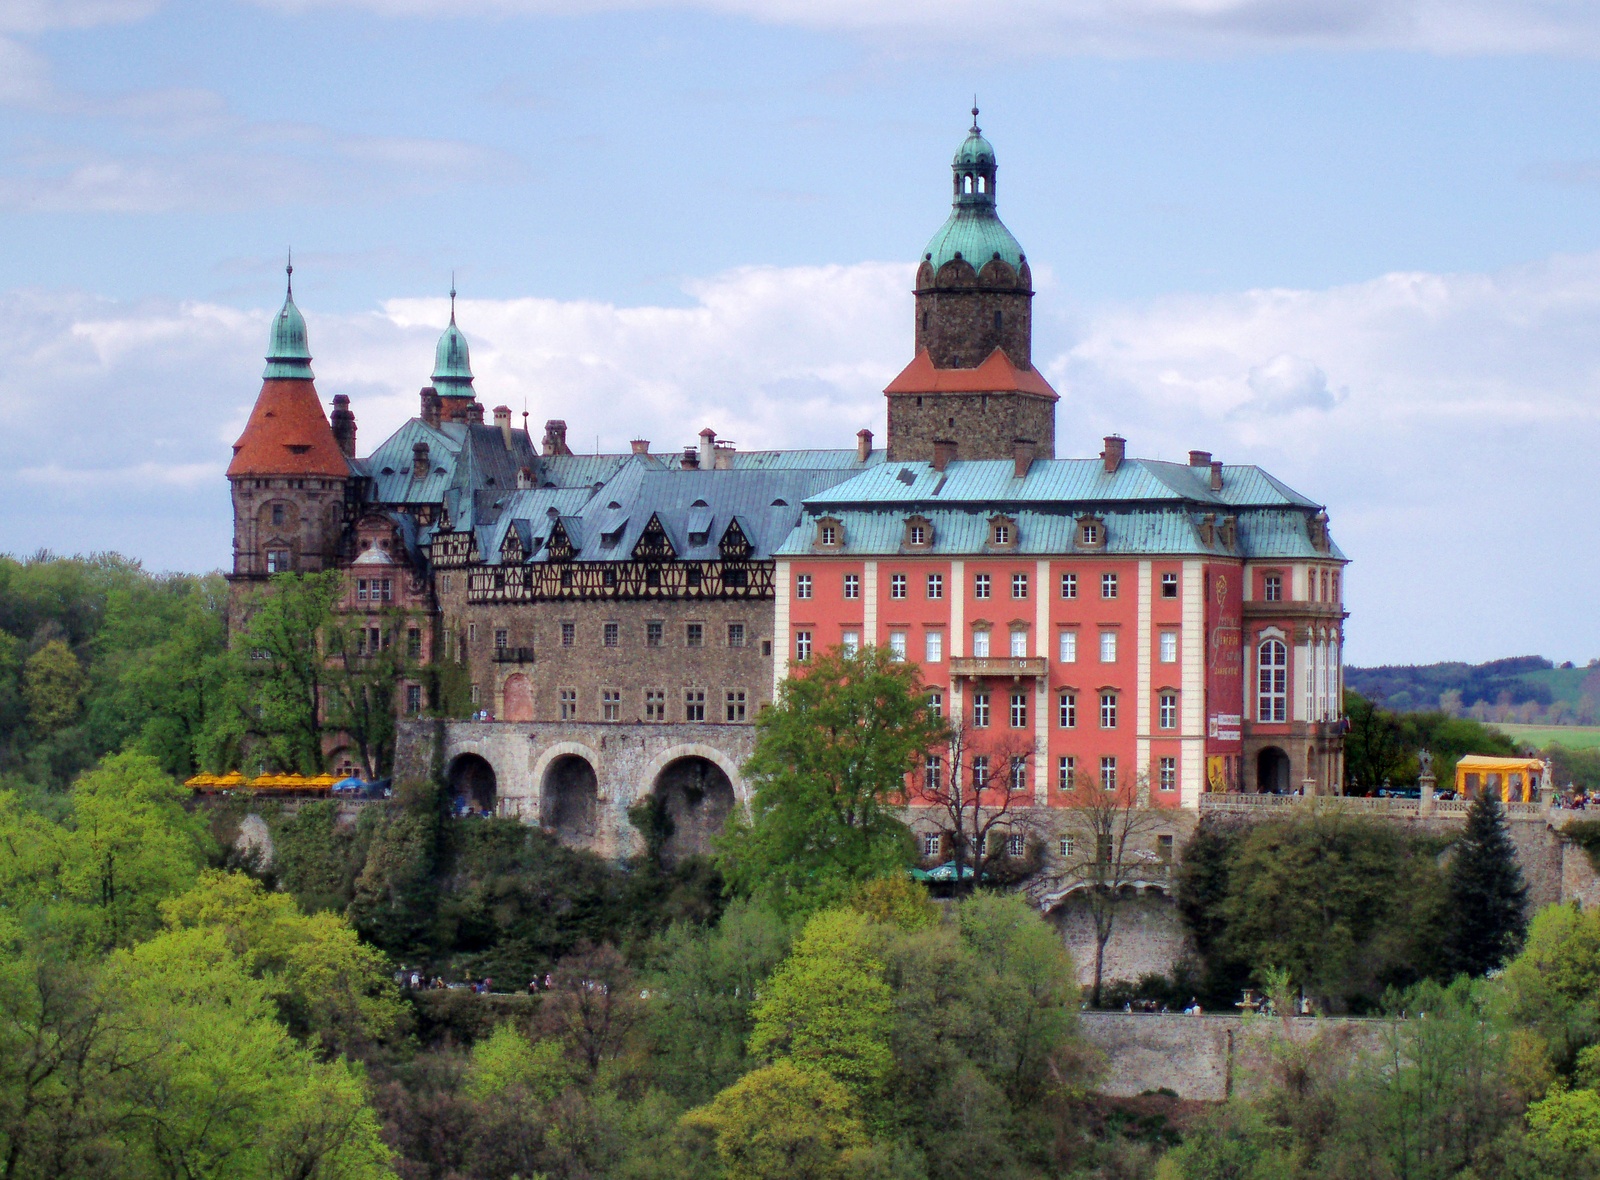 Książ Castle - a new building described